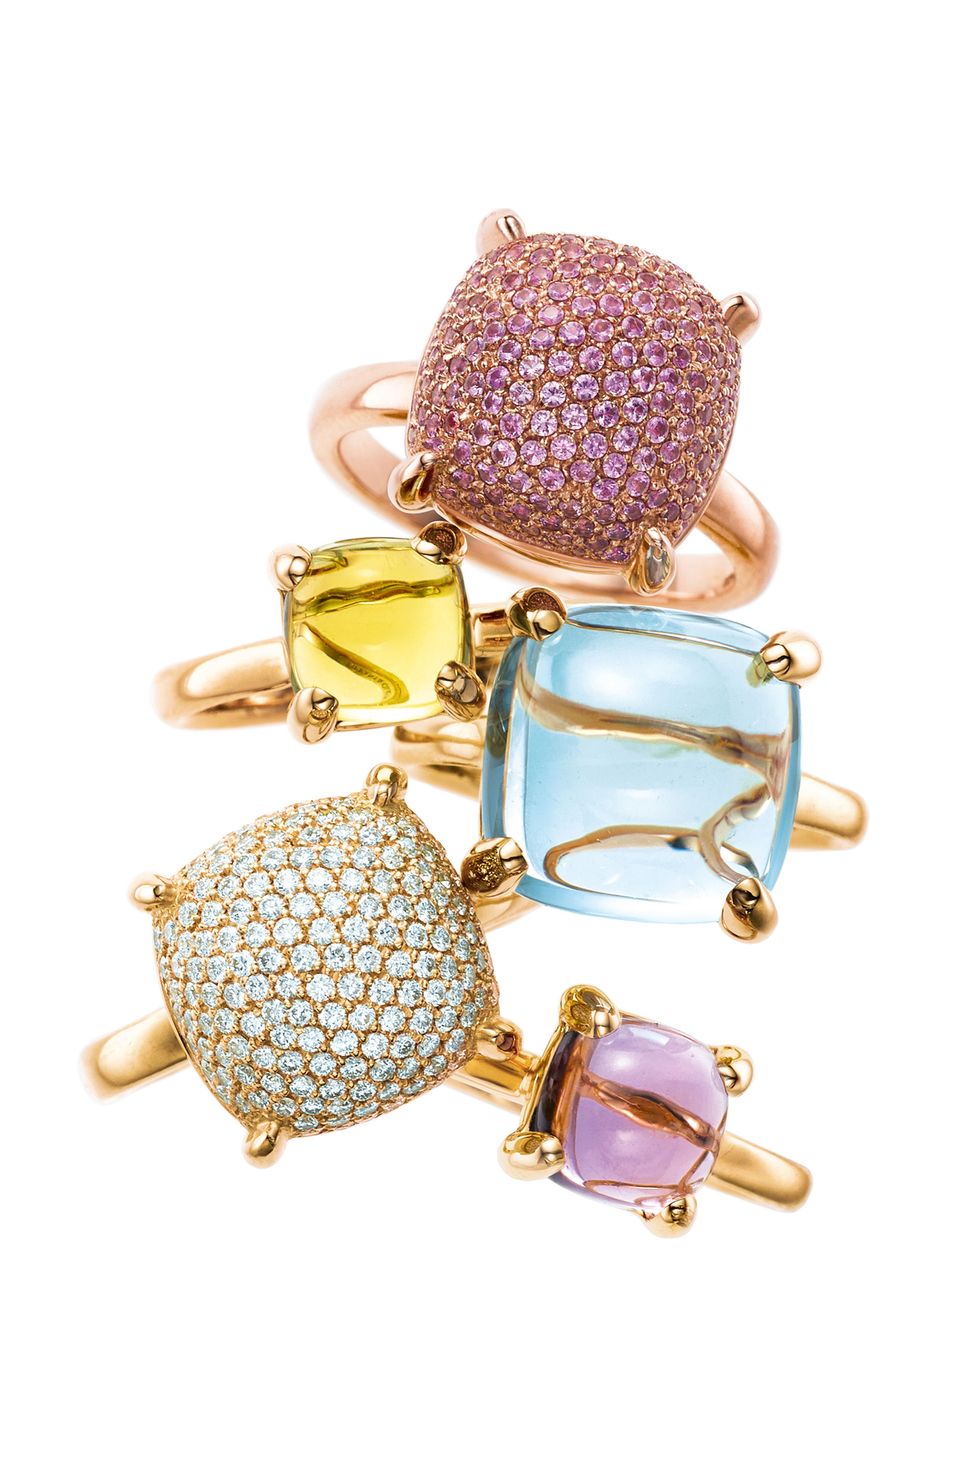 Tiffany & Co jewellery Christmas gift ideas 2016